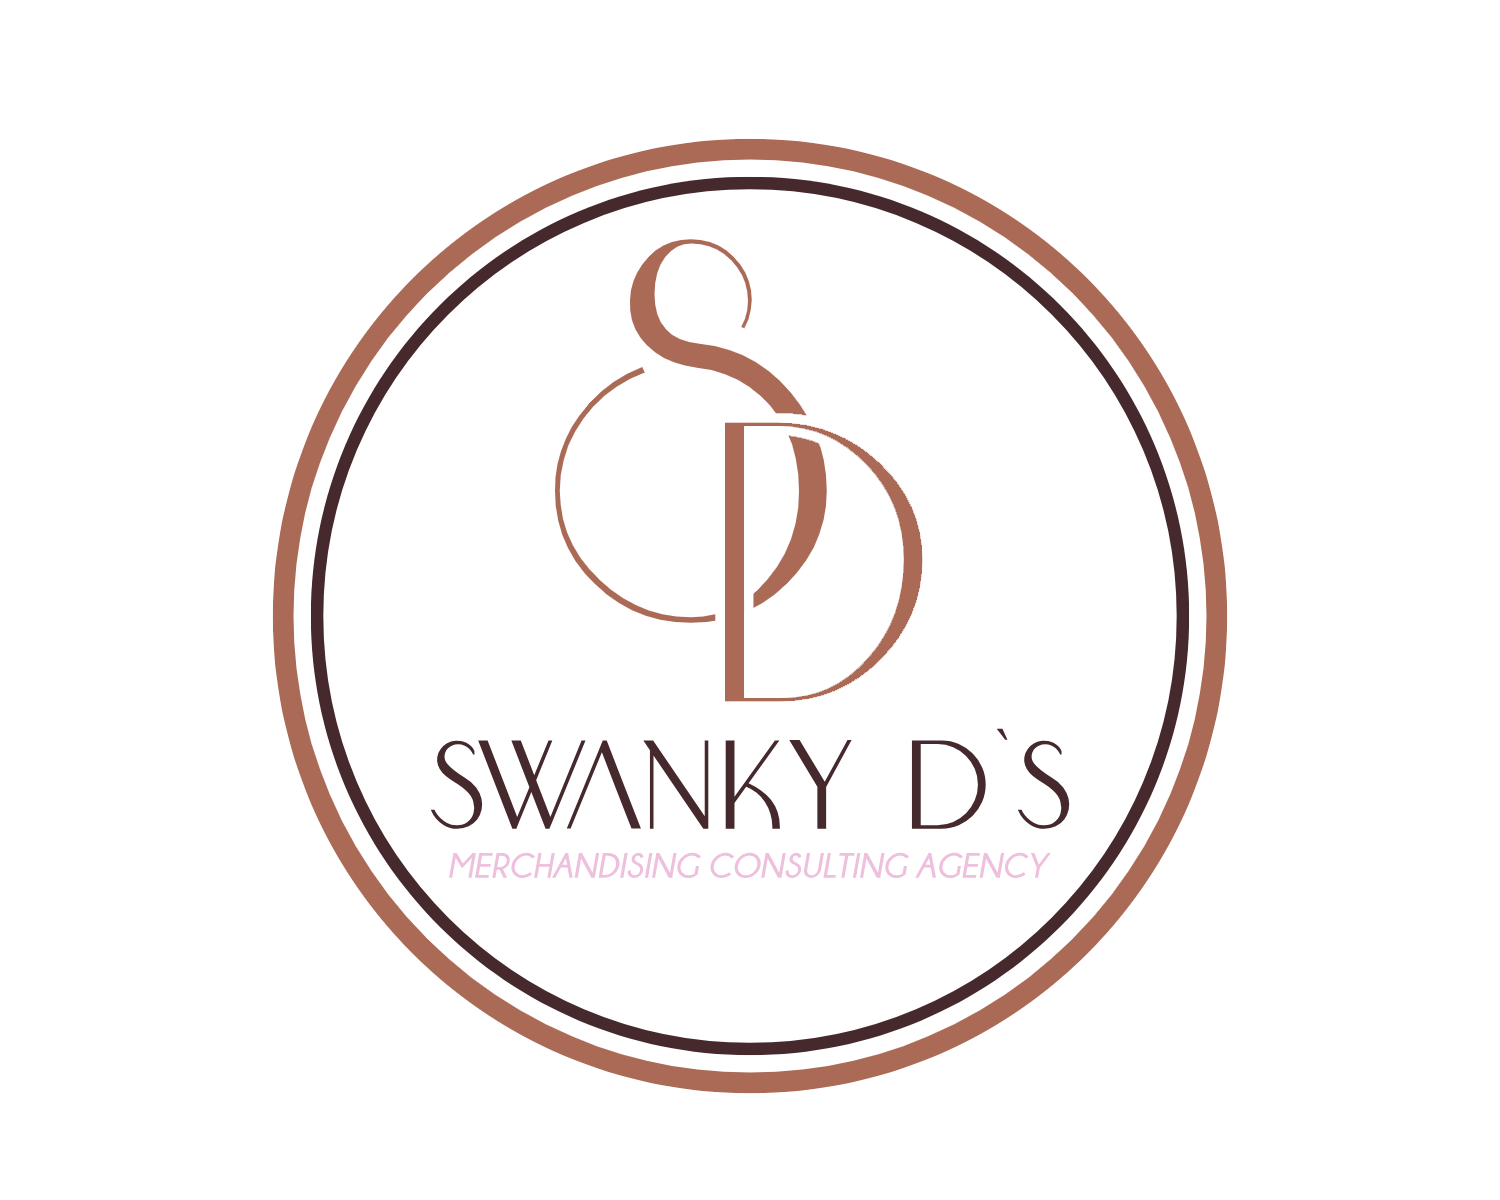 Swanky D's